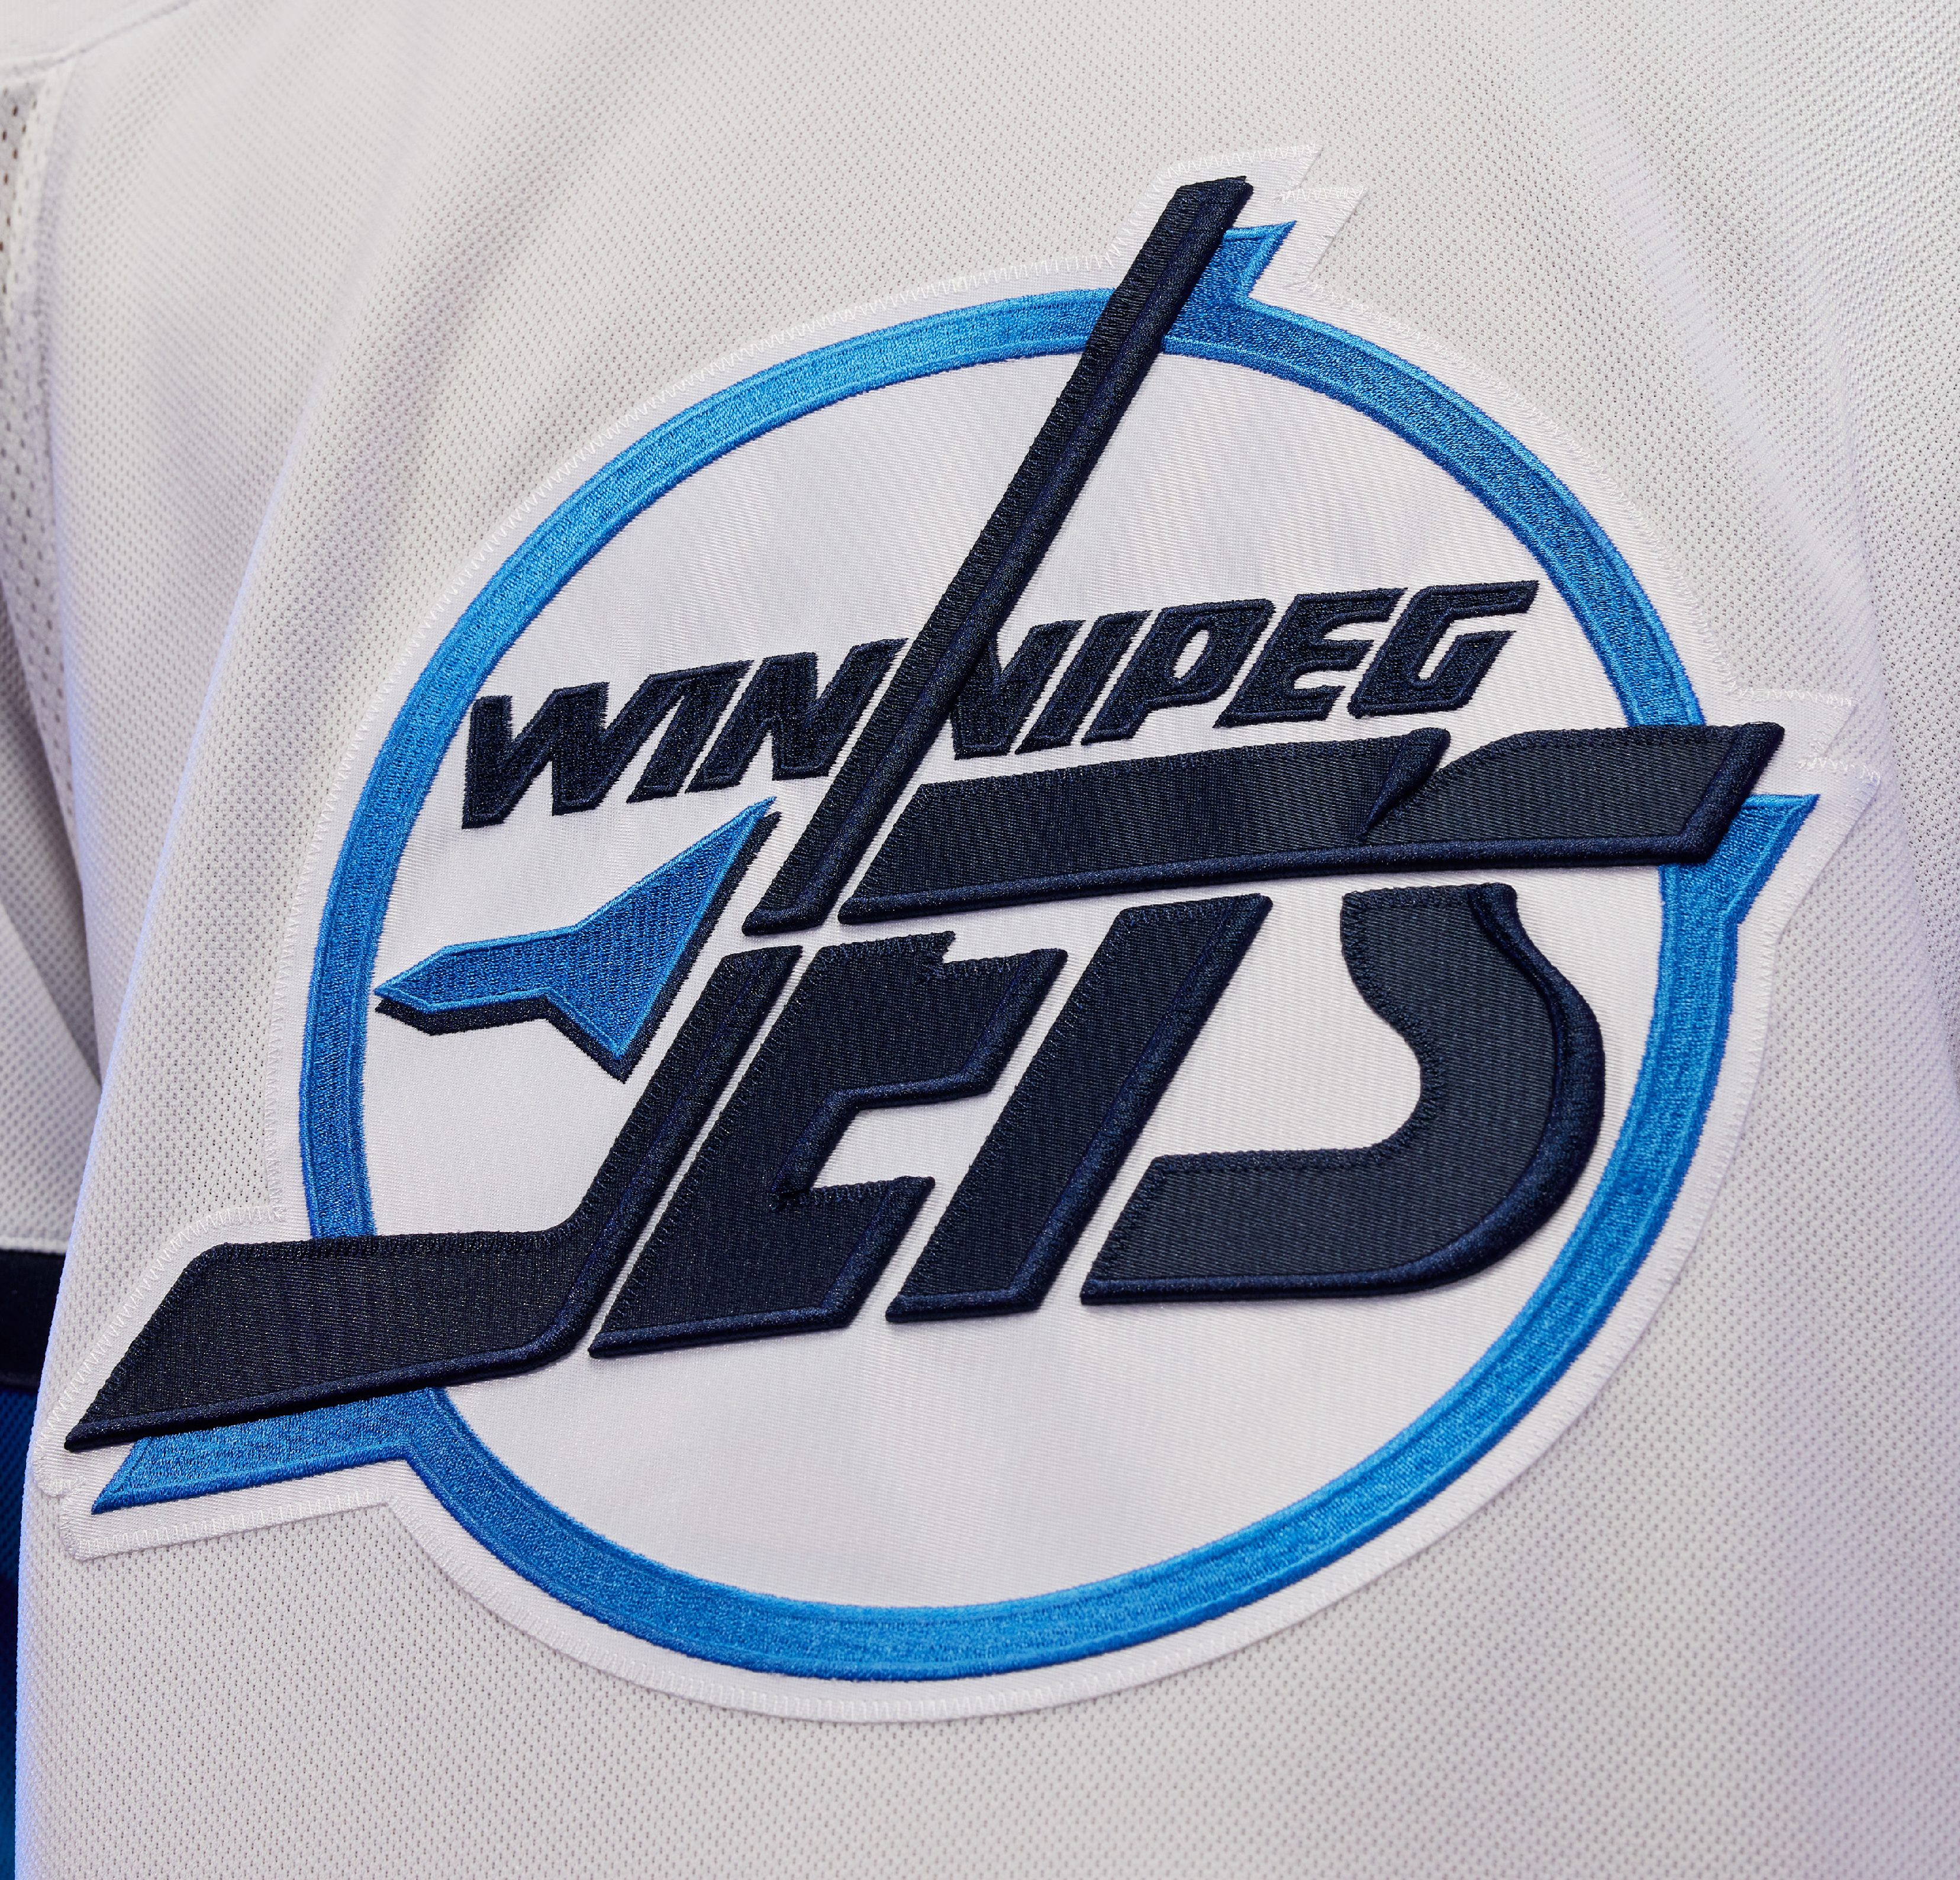 Winnipeg Jets retro jersey